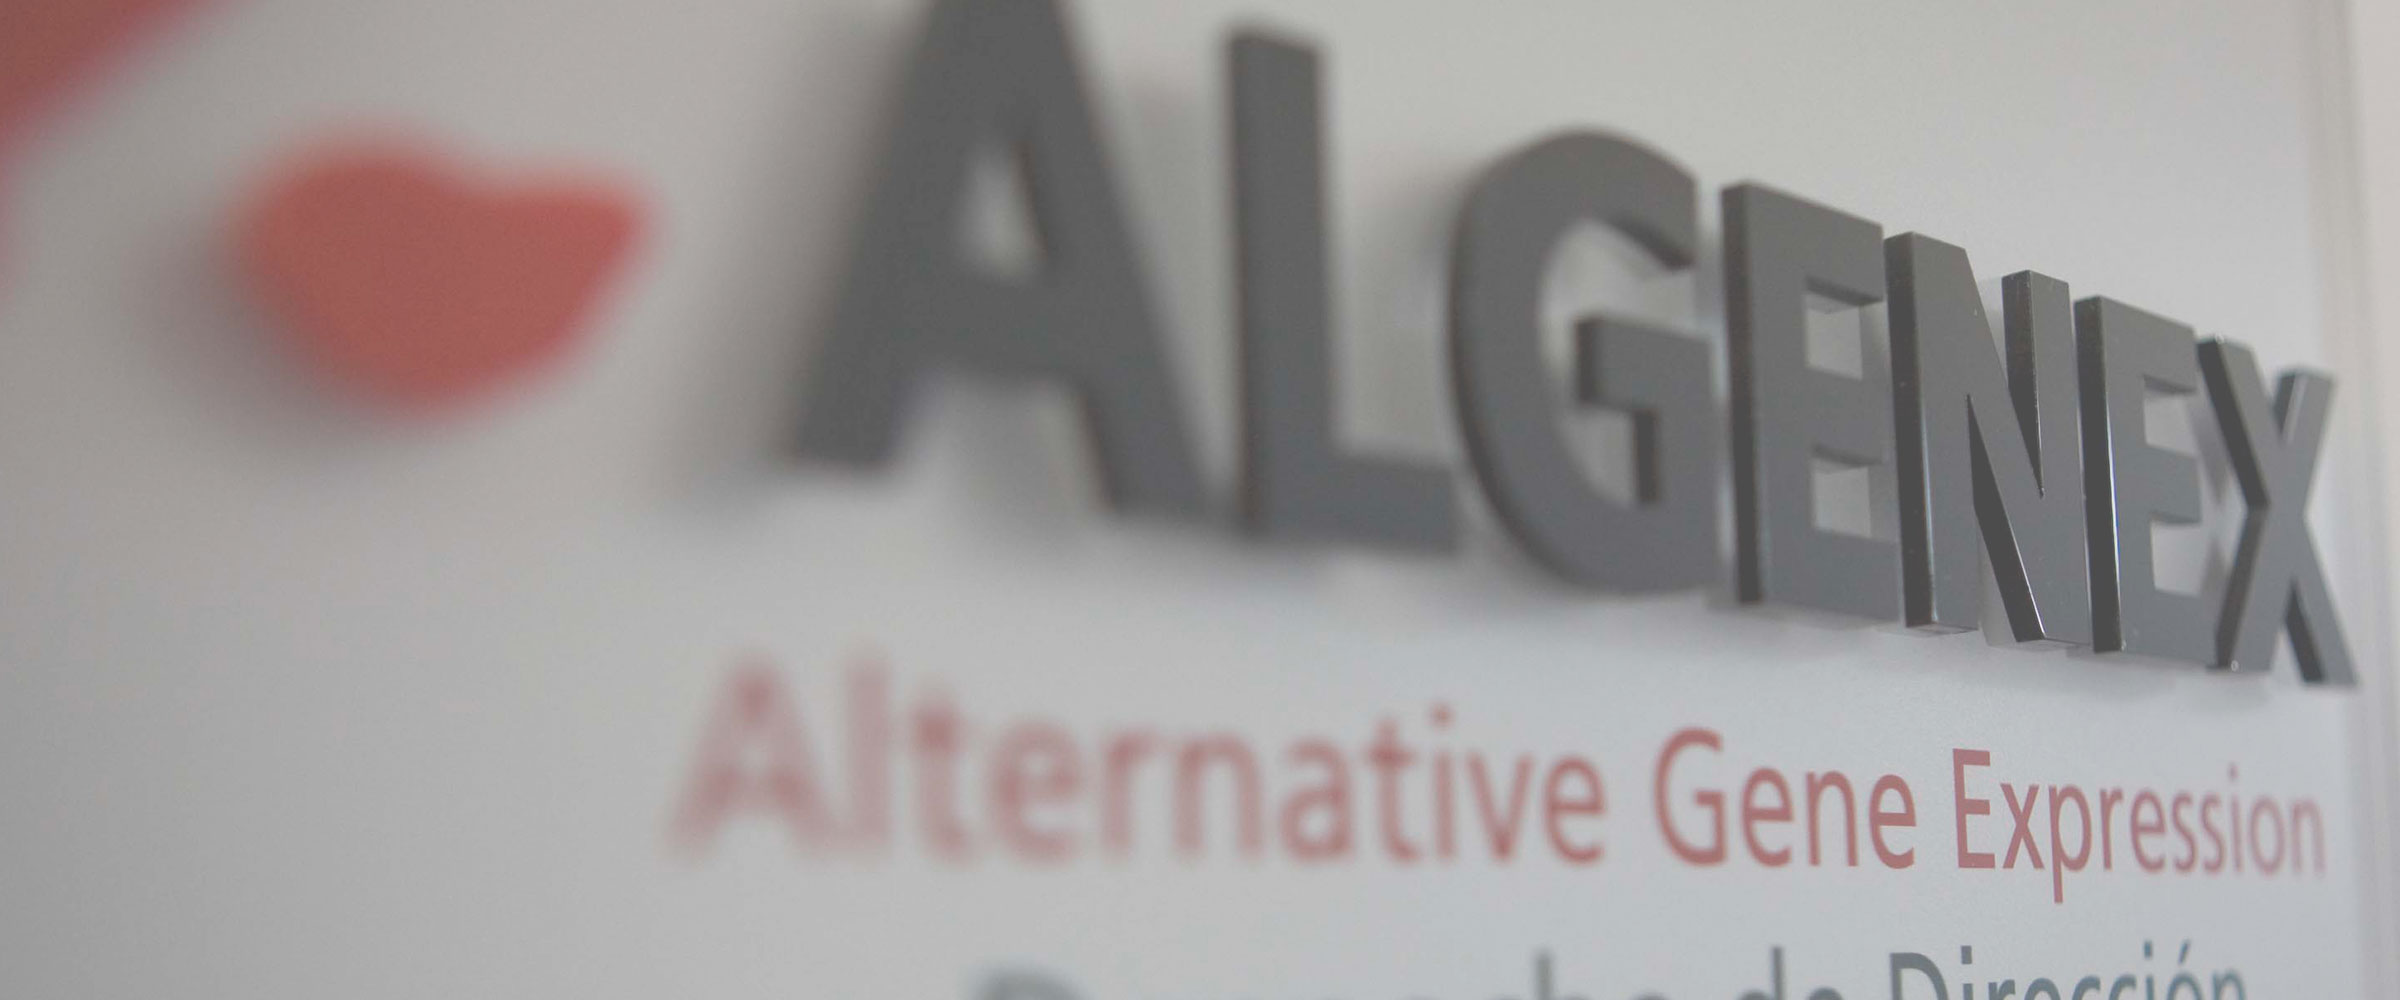 ALGENEX appoints new Strategic Advisory Board (SAB)